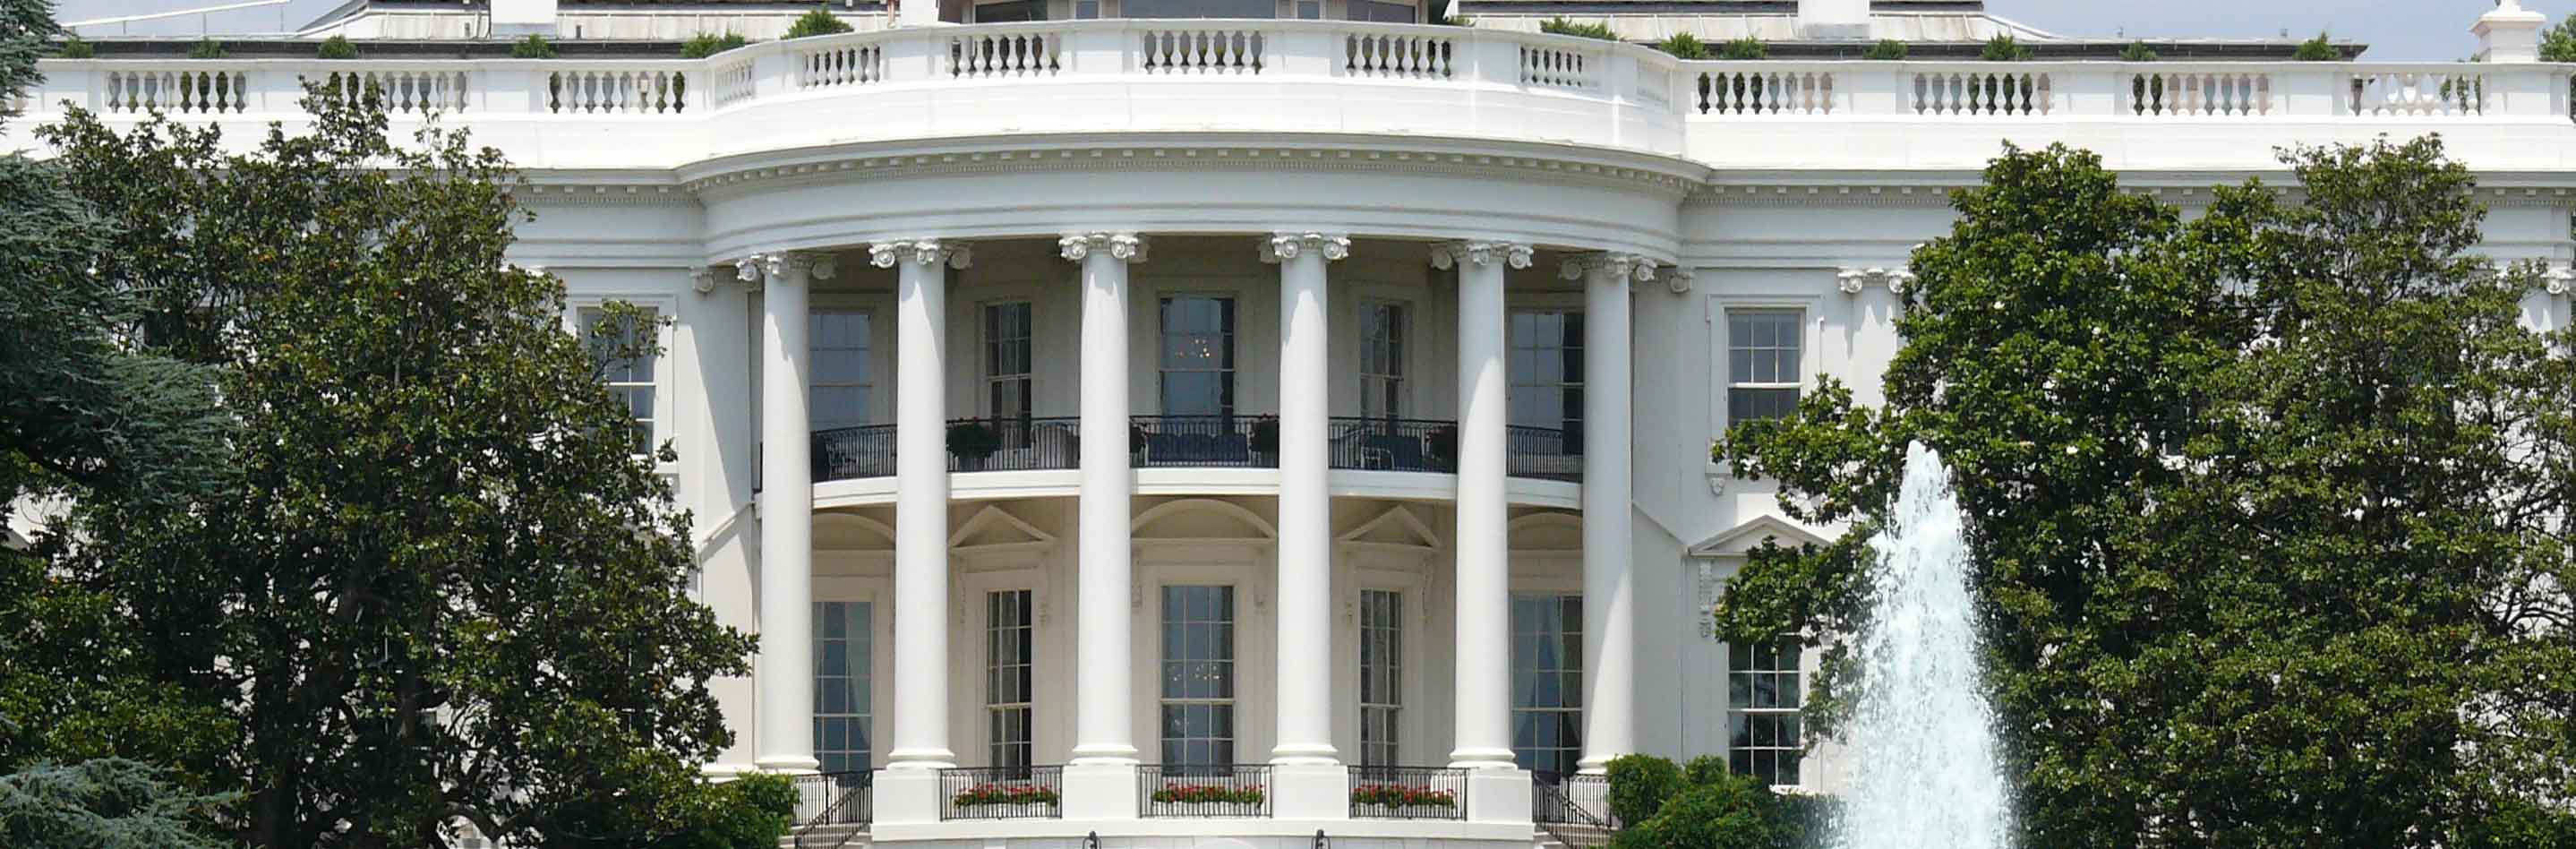 White House Columns